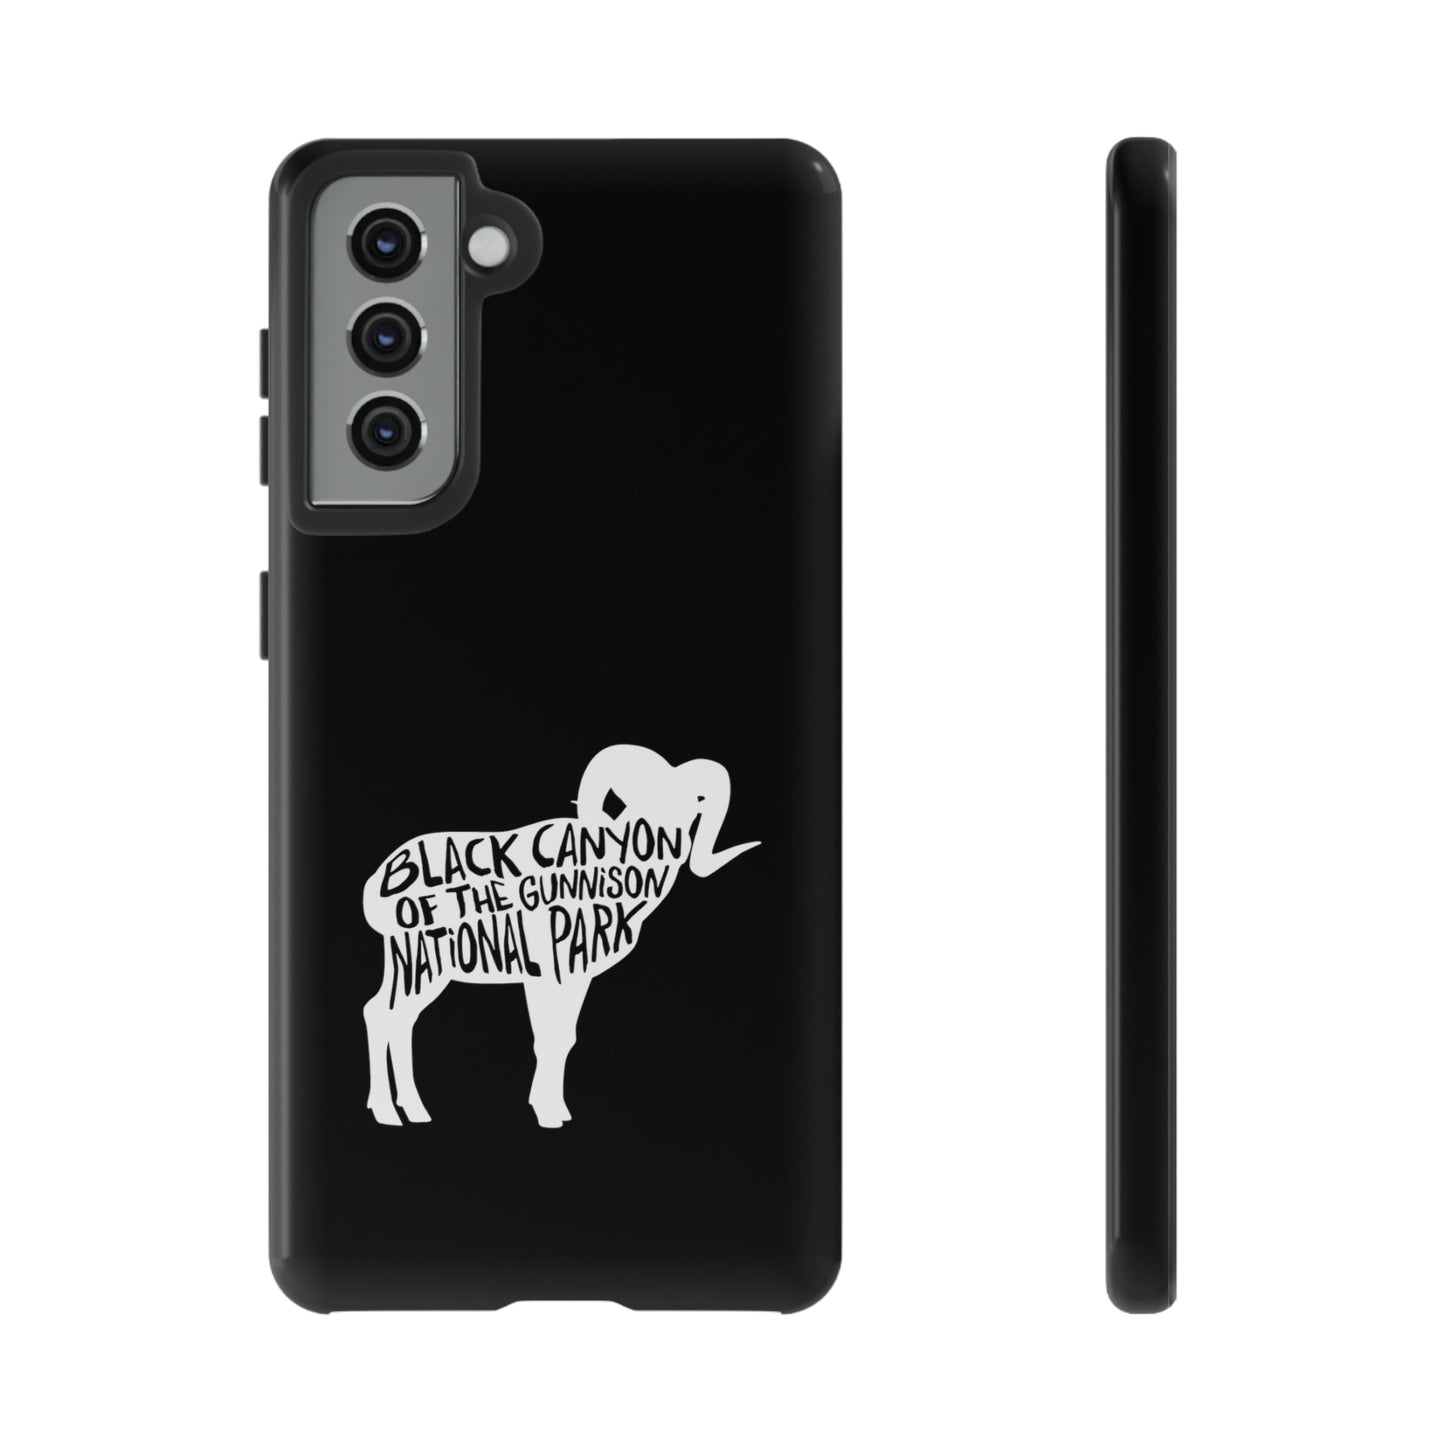 Black Canyon of the Gunnison National Park Phone Case - Bighorn Sheep Design